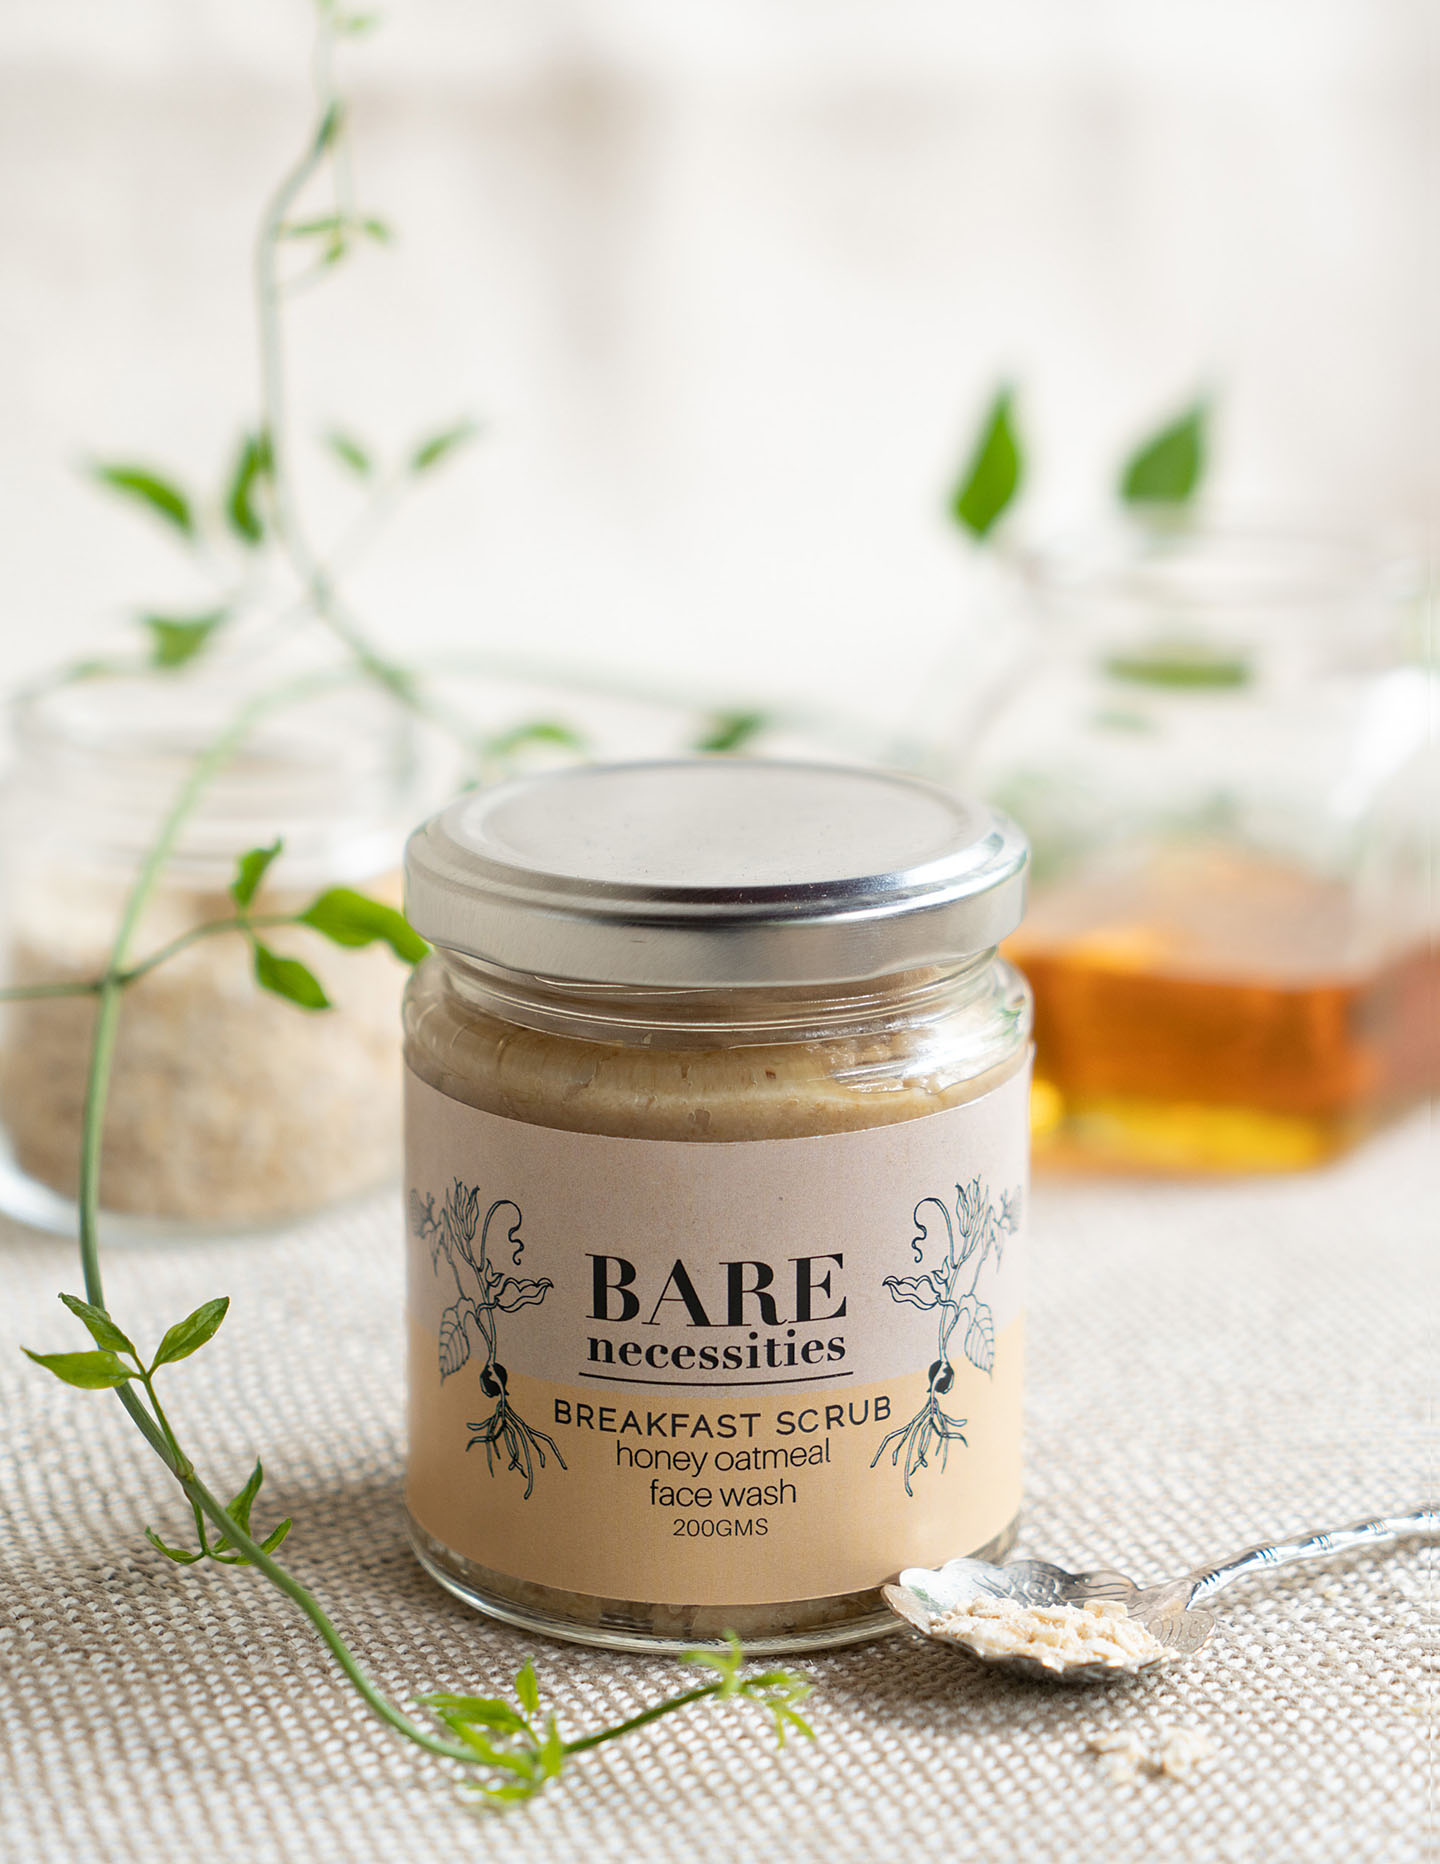 Bare Necessities - Breakfast Scrub Honey Oatmeal Face wash - 590 INR